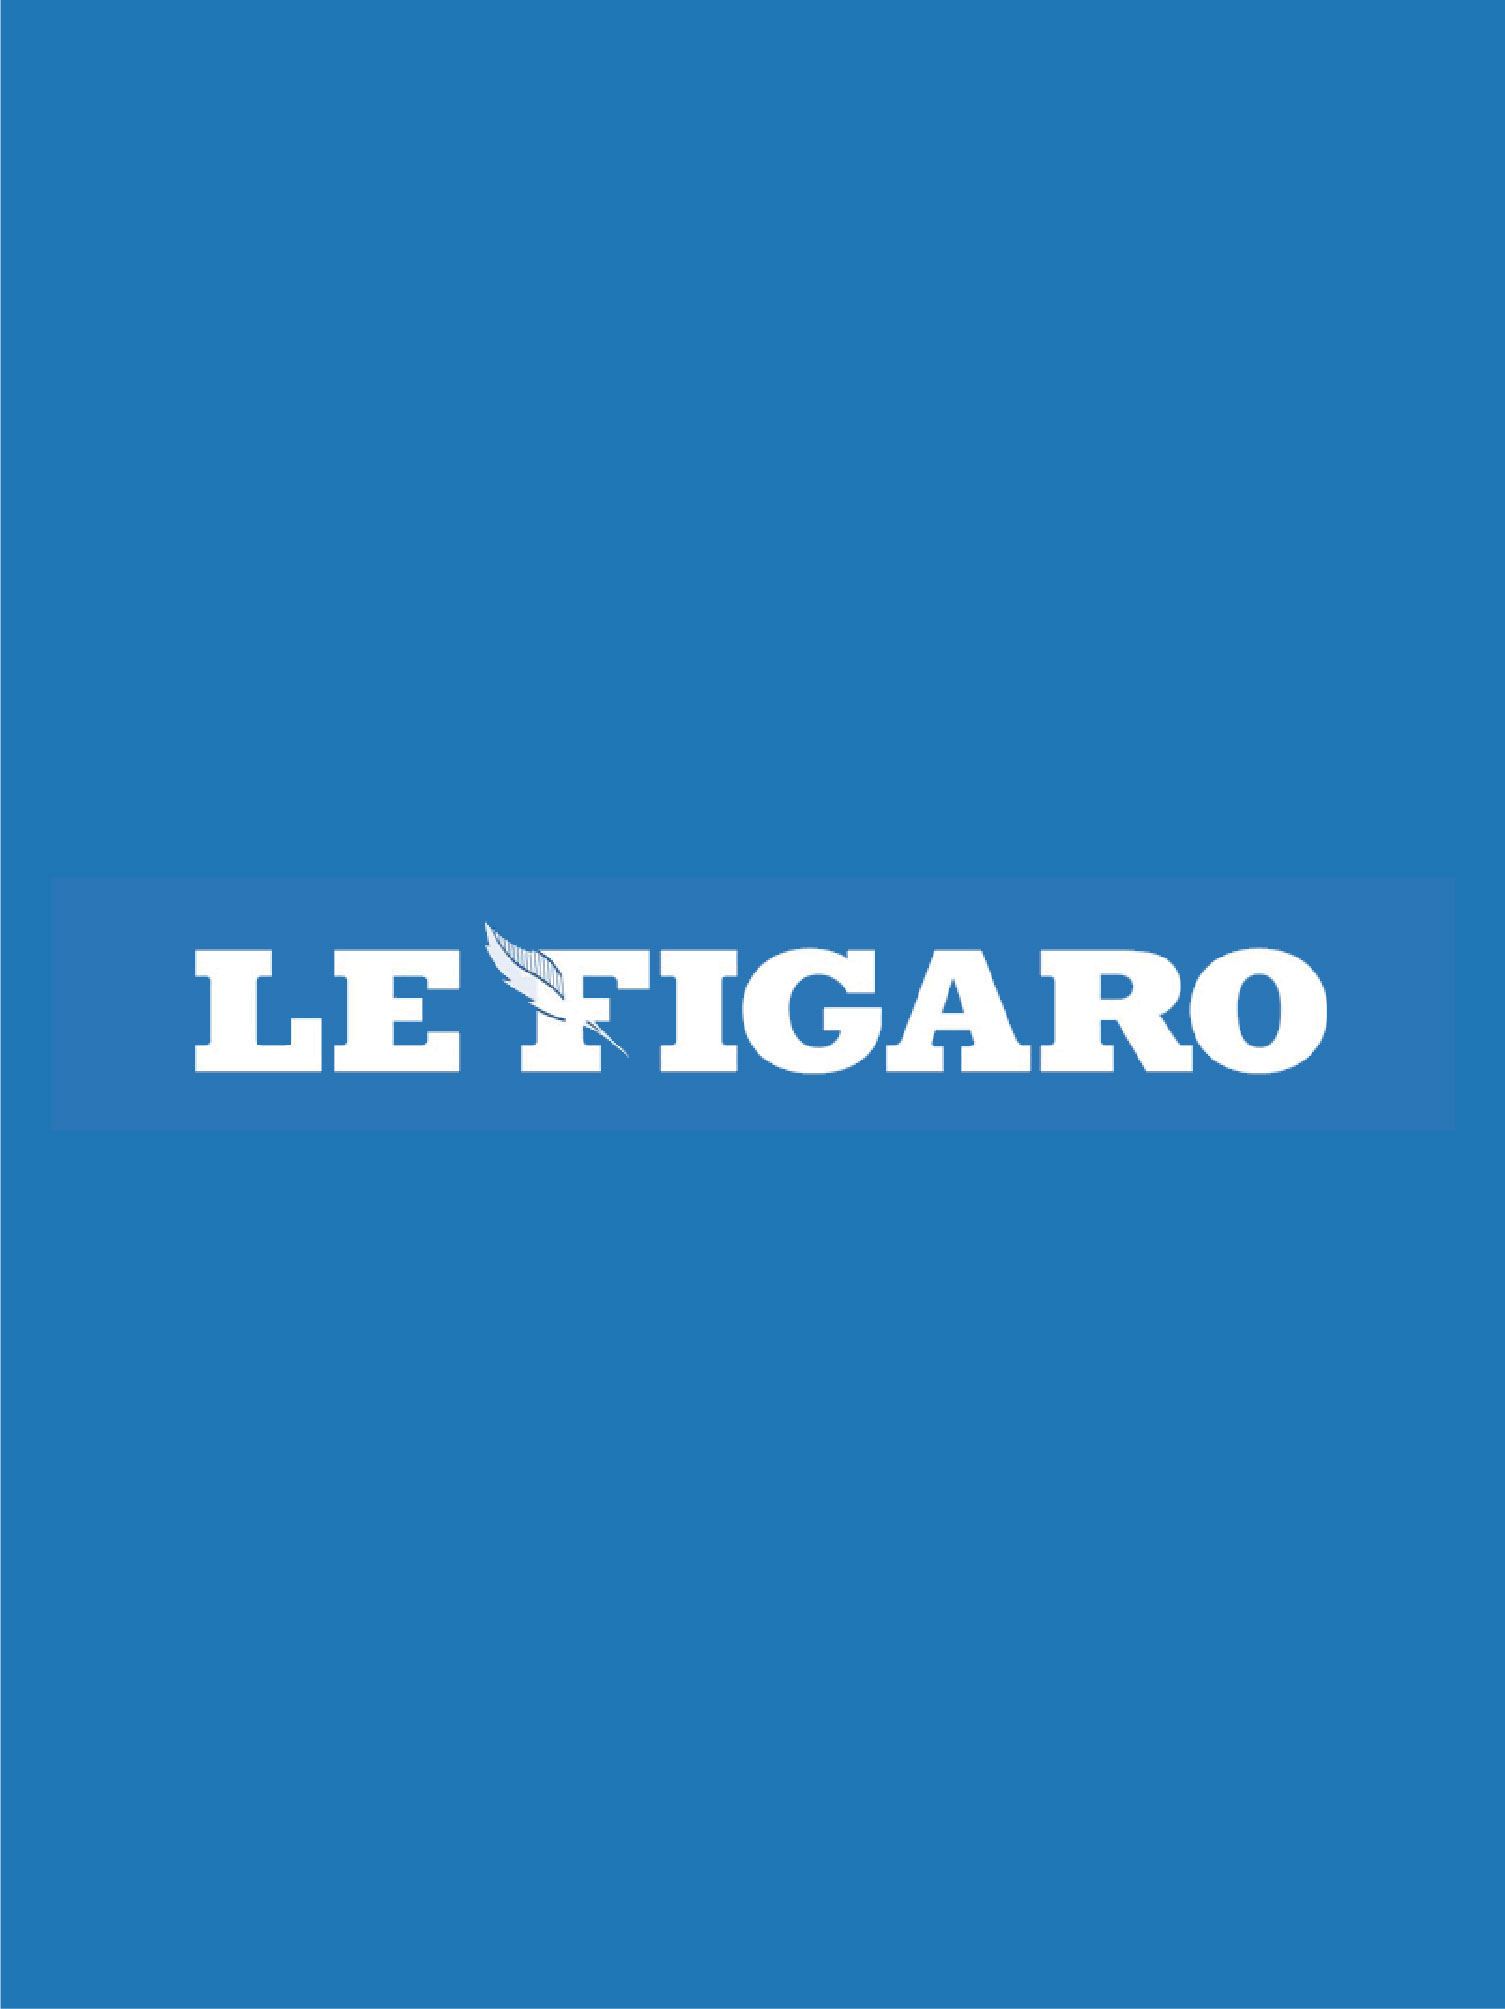 logo of the figaro magazine